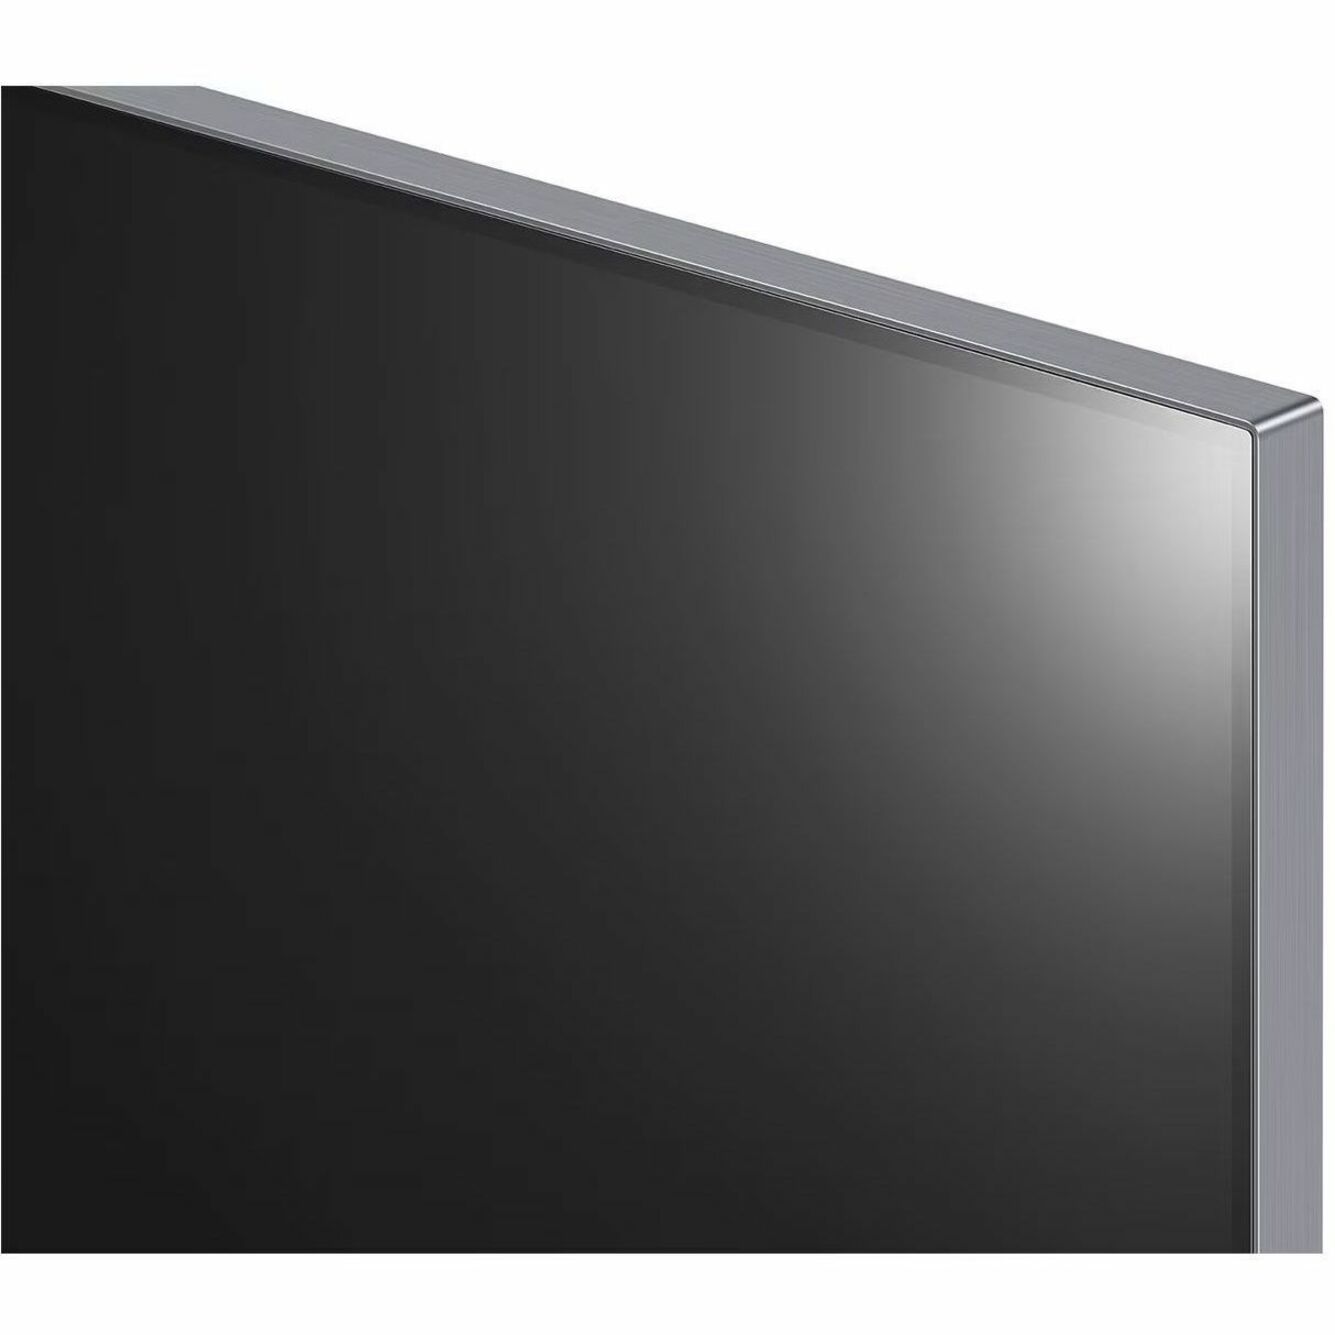 LG evo G3 OLED55G3PUA 55" Smart OLED TV - 4K UHDTV